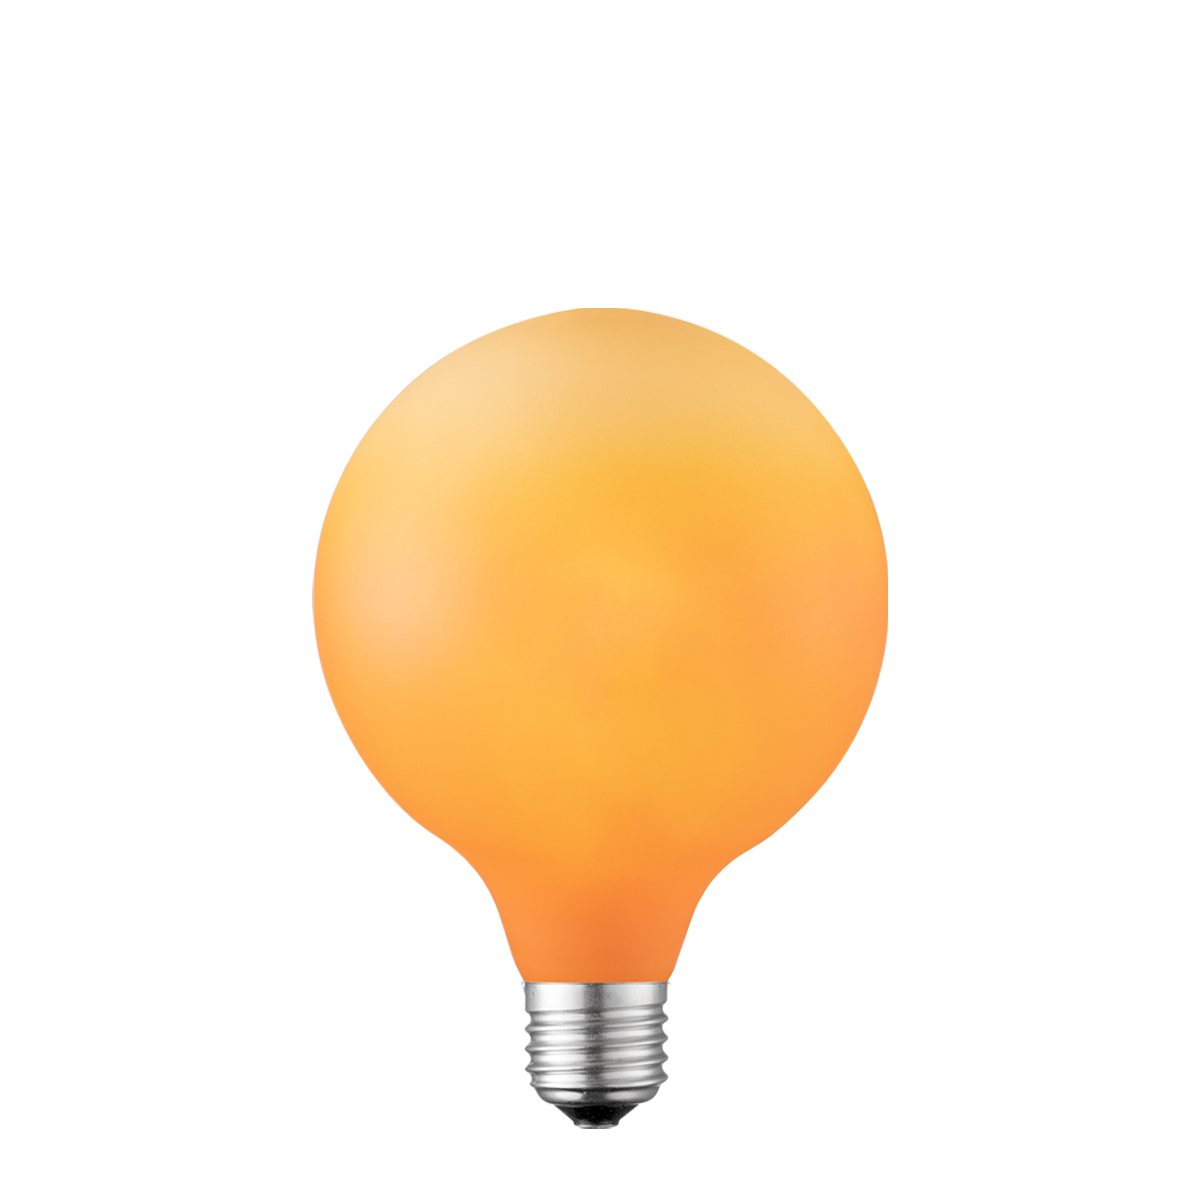 Tangla lighting - TLB-9005-04N - LED Light Bulb Single Spiral filament - G125 4W gradient opal - non dimmable - E27